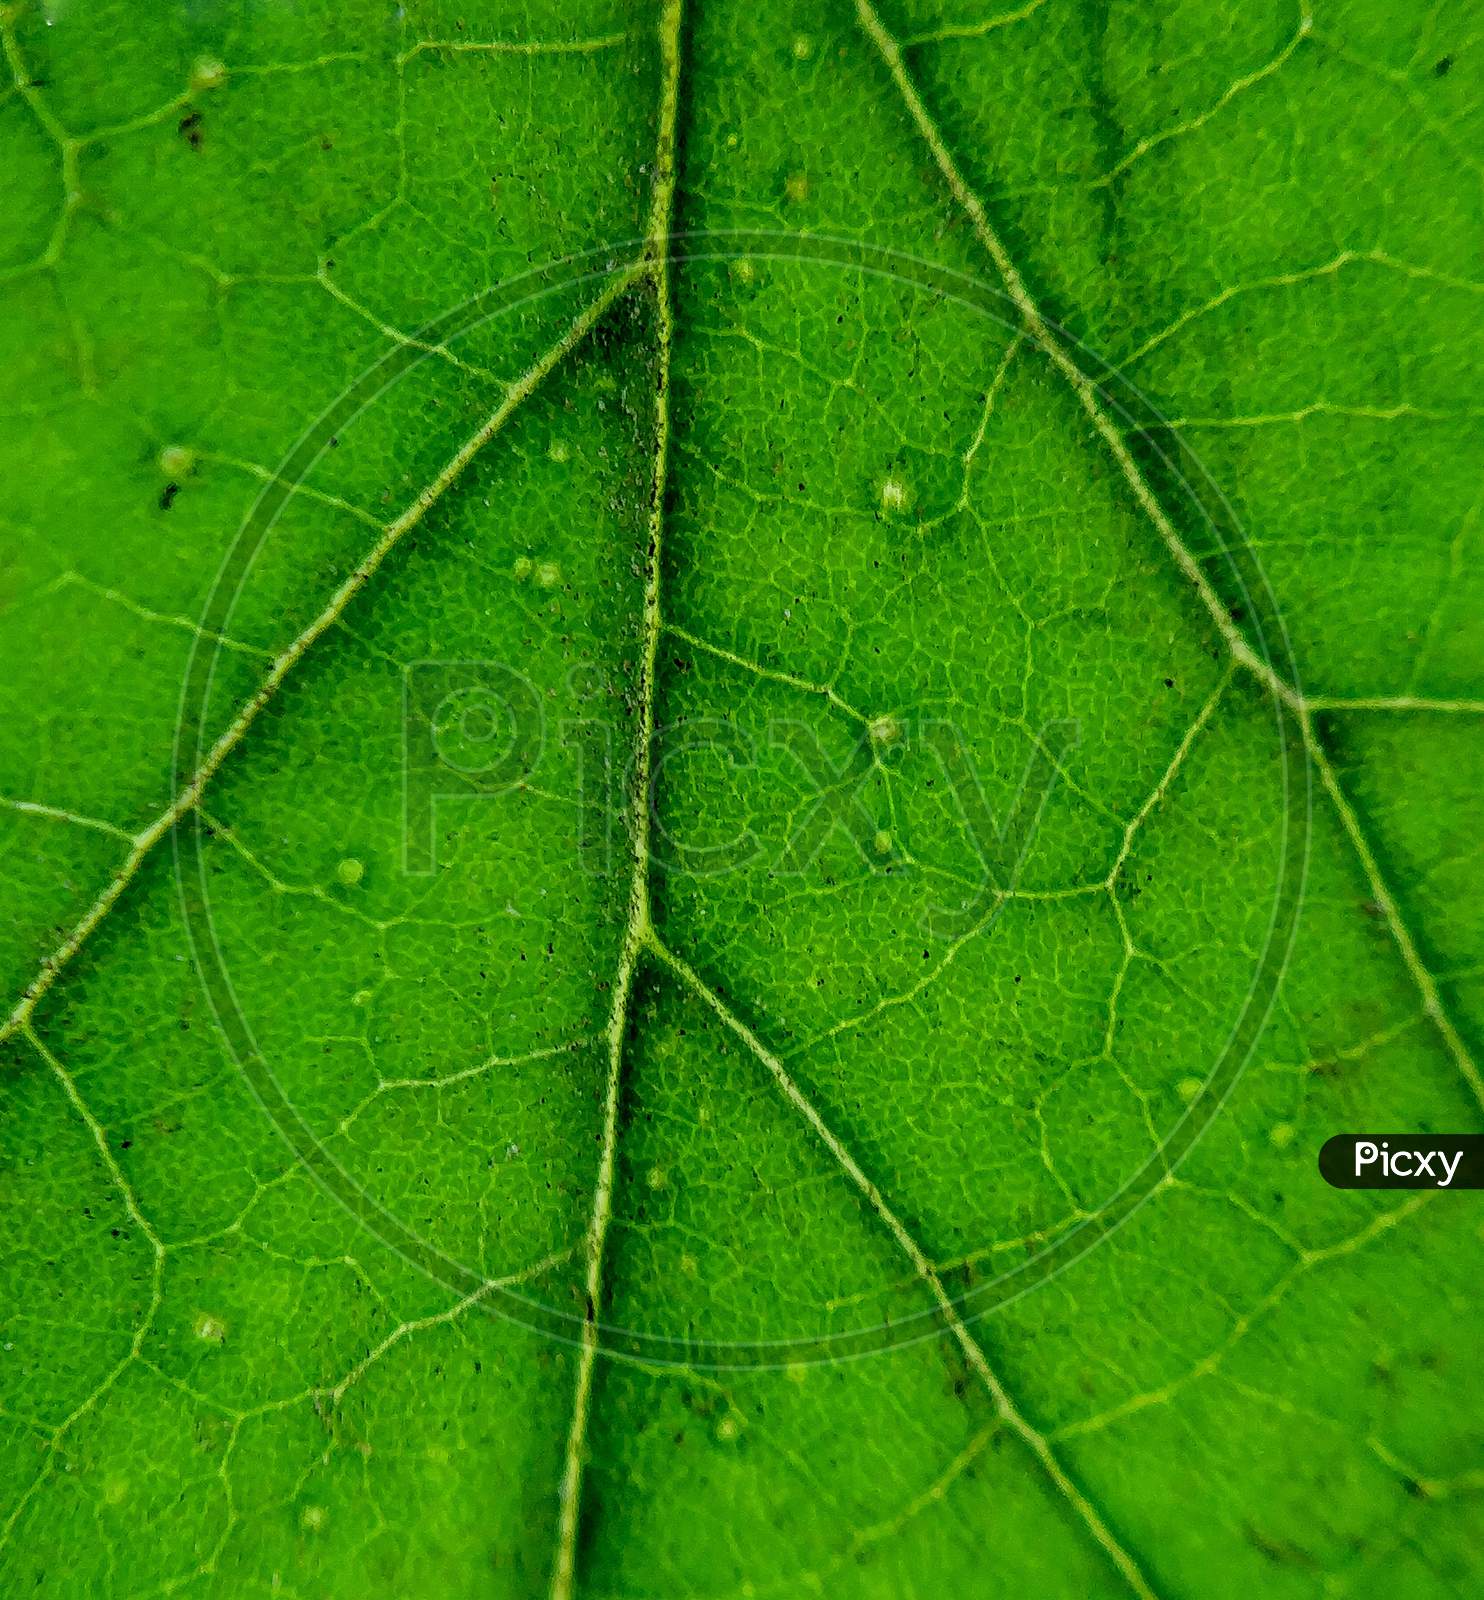 Macro of a leaf